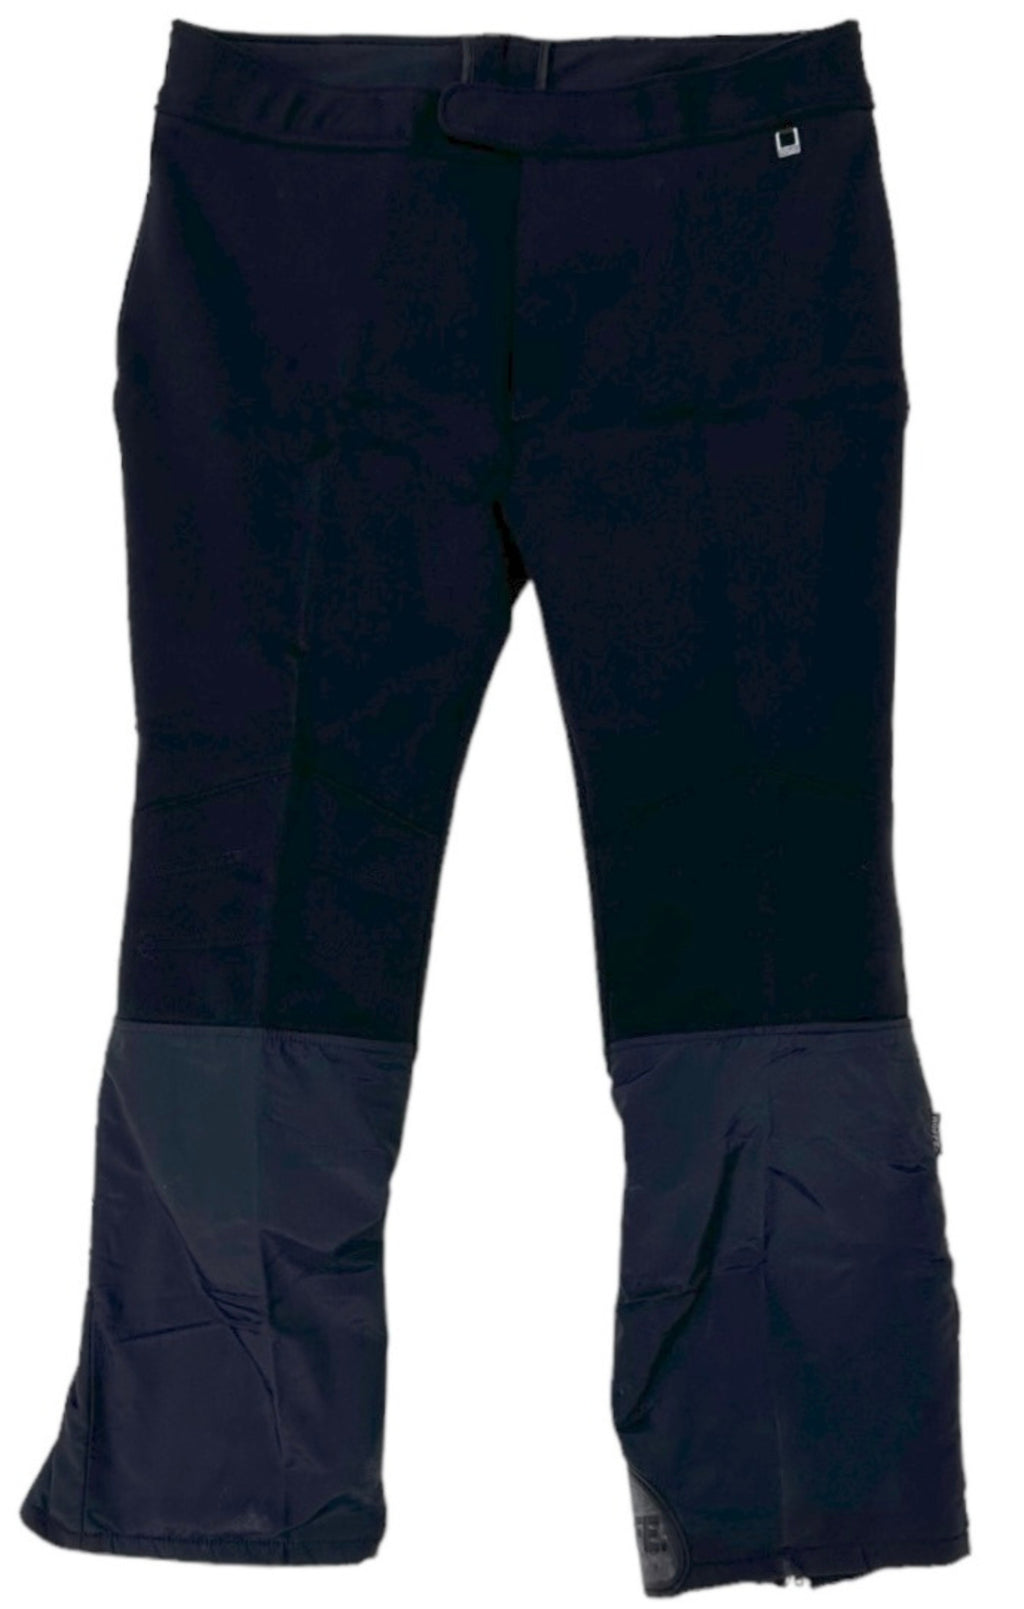 VINTAGE ROFFE Ski Pants Size: Mens 38 / Fit like L